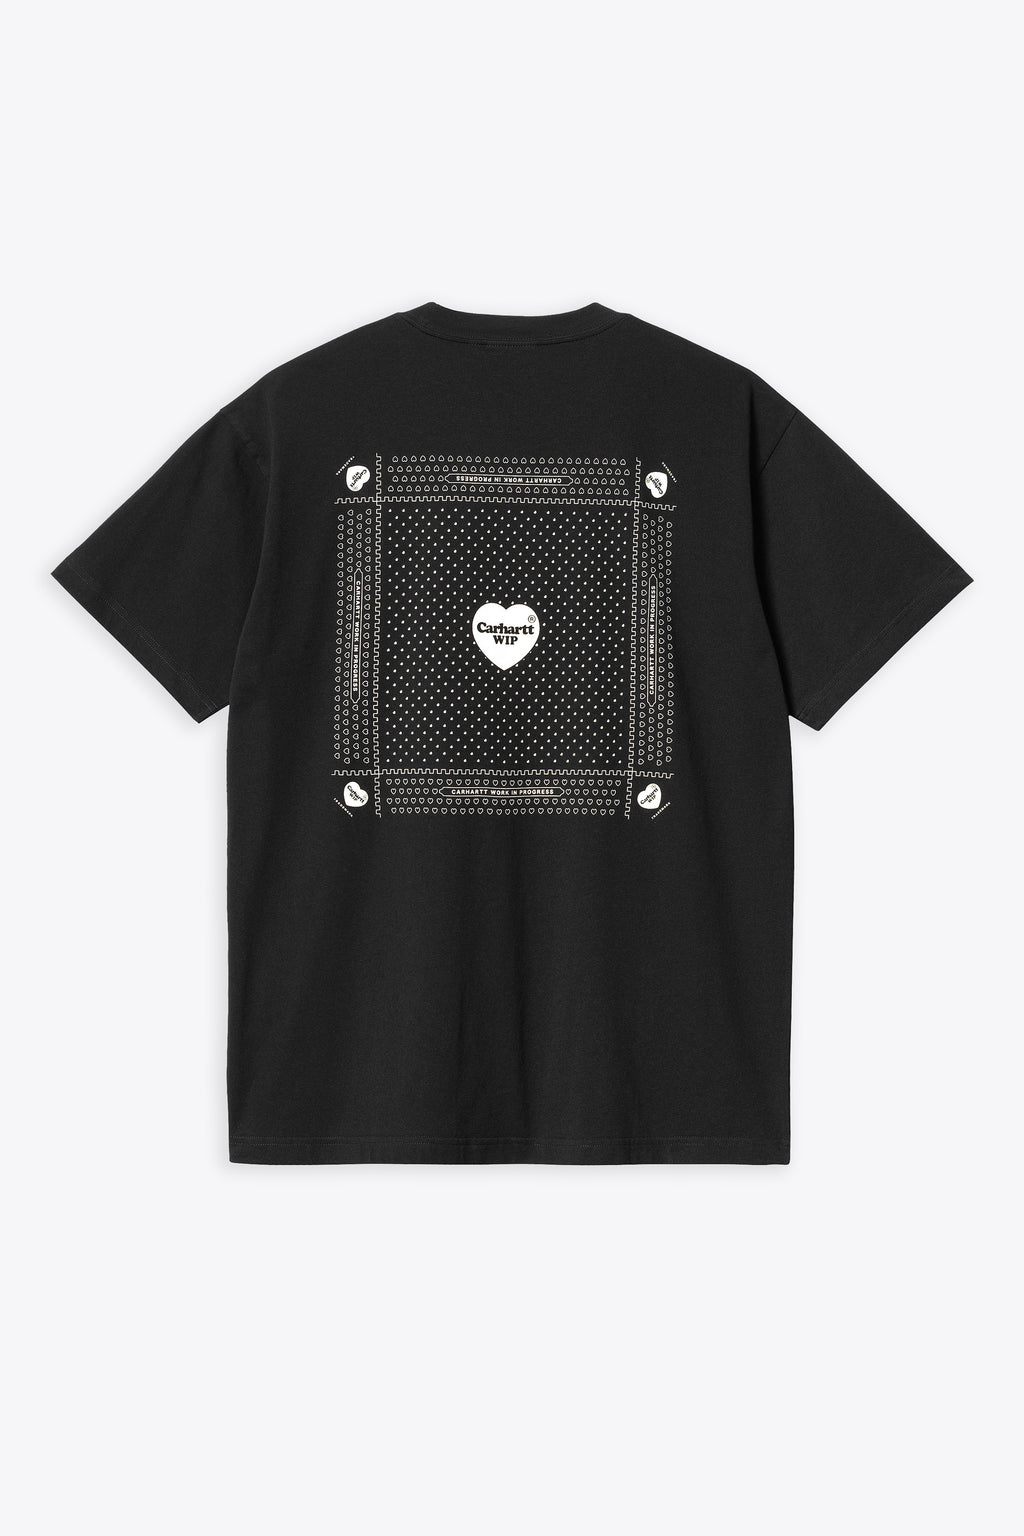 alt-image__Black-cotton-t-shirt-with-heart-graphic-print---S/S-Heart-Bandana-T-Shirt